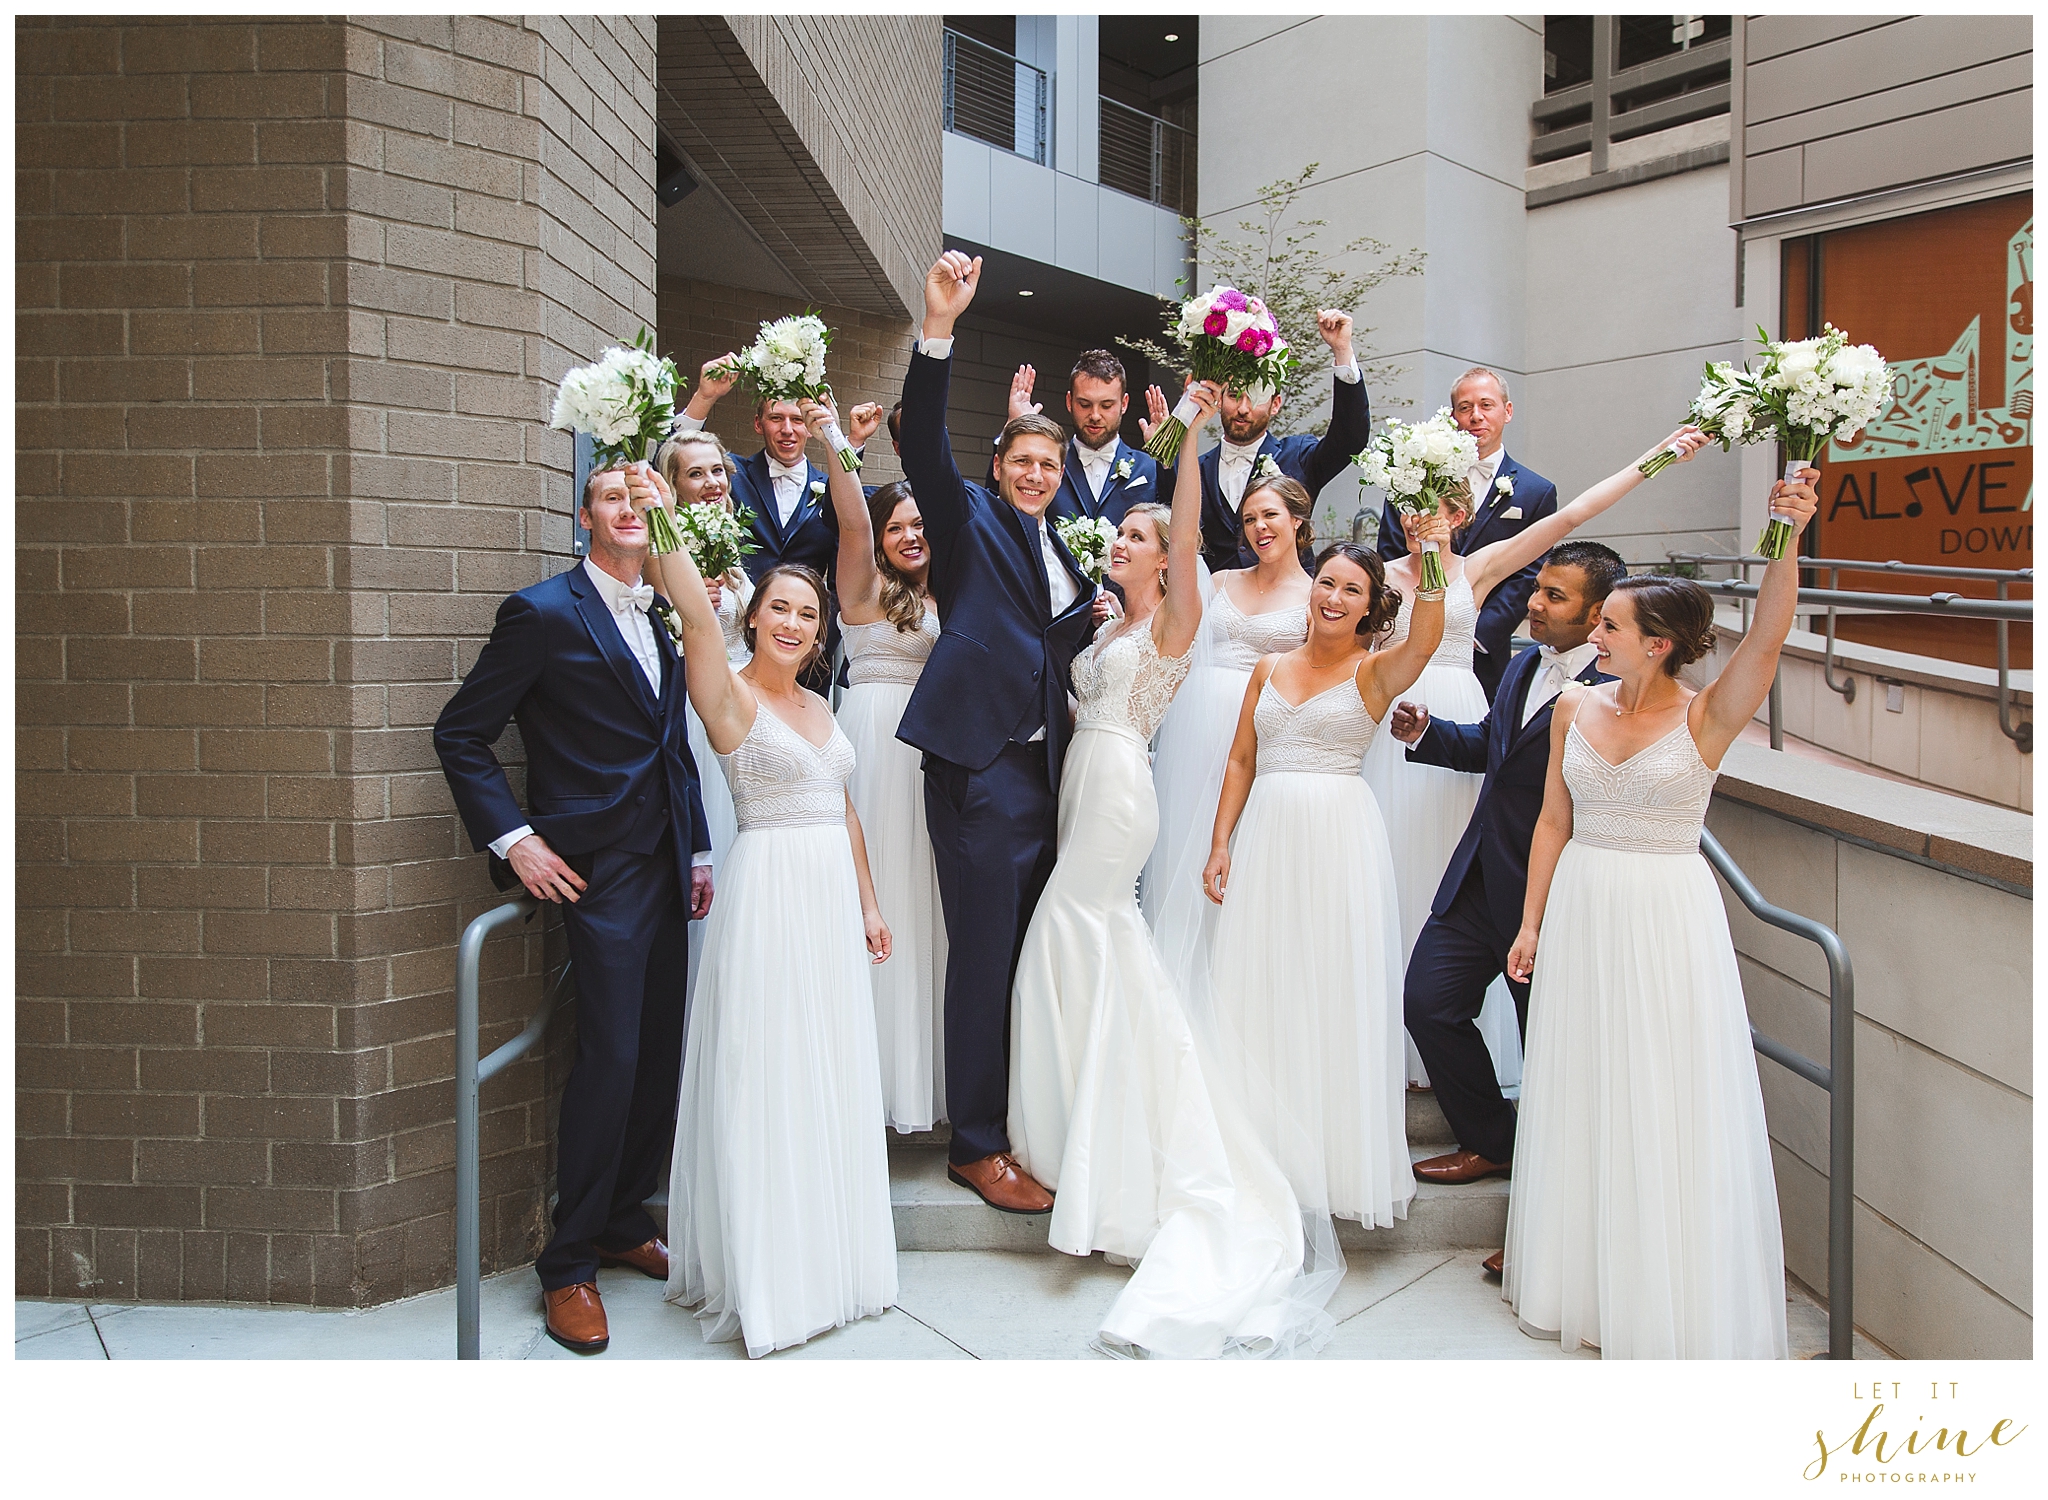 The Grove Hotel Boise Wedding 2017 Let it Shine Photography-9074.jpg